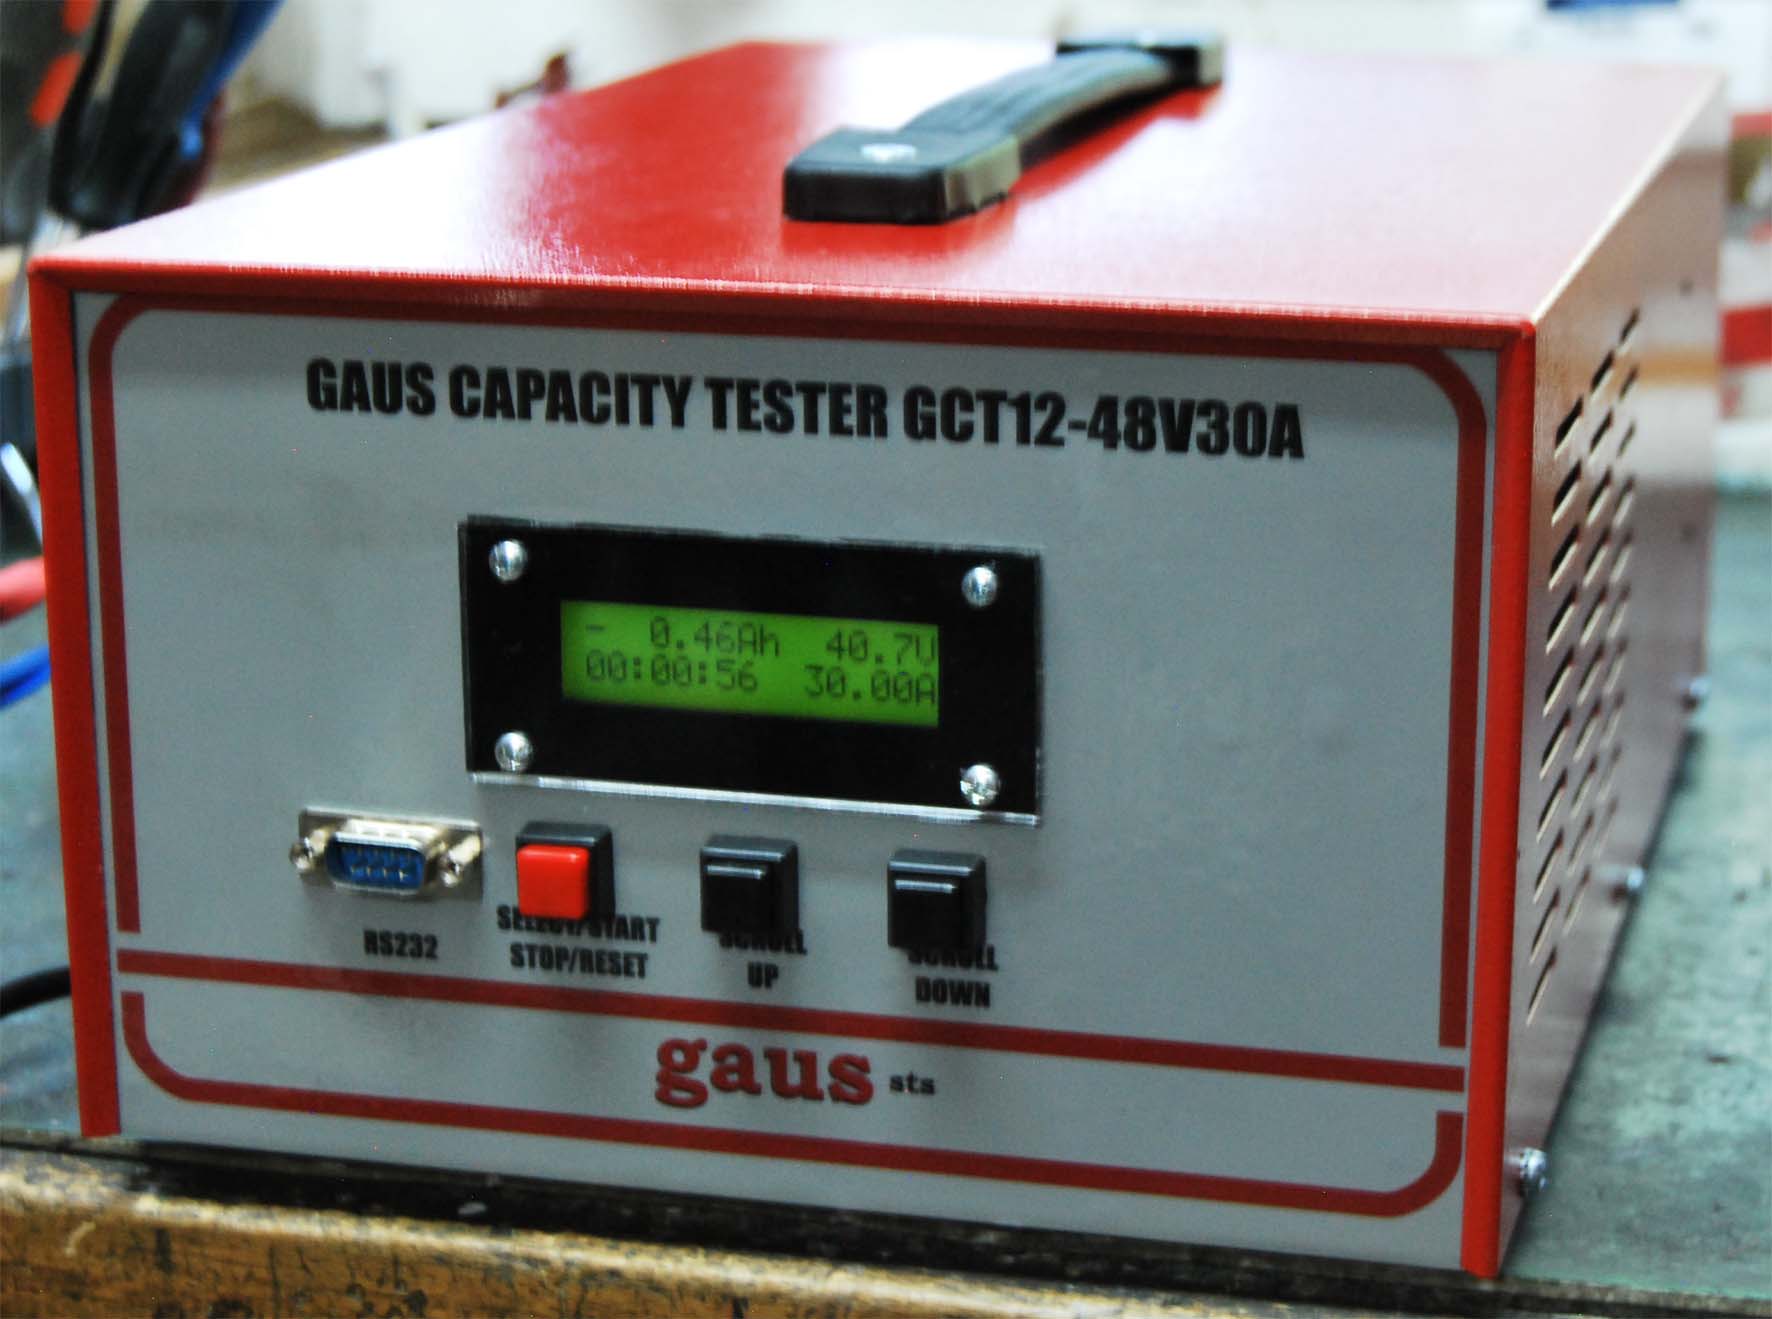 Gaus Capacity Tester GCT12-48V30A